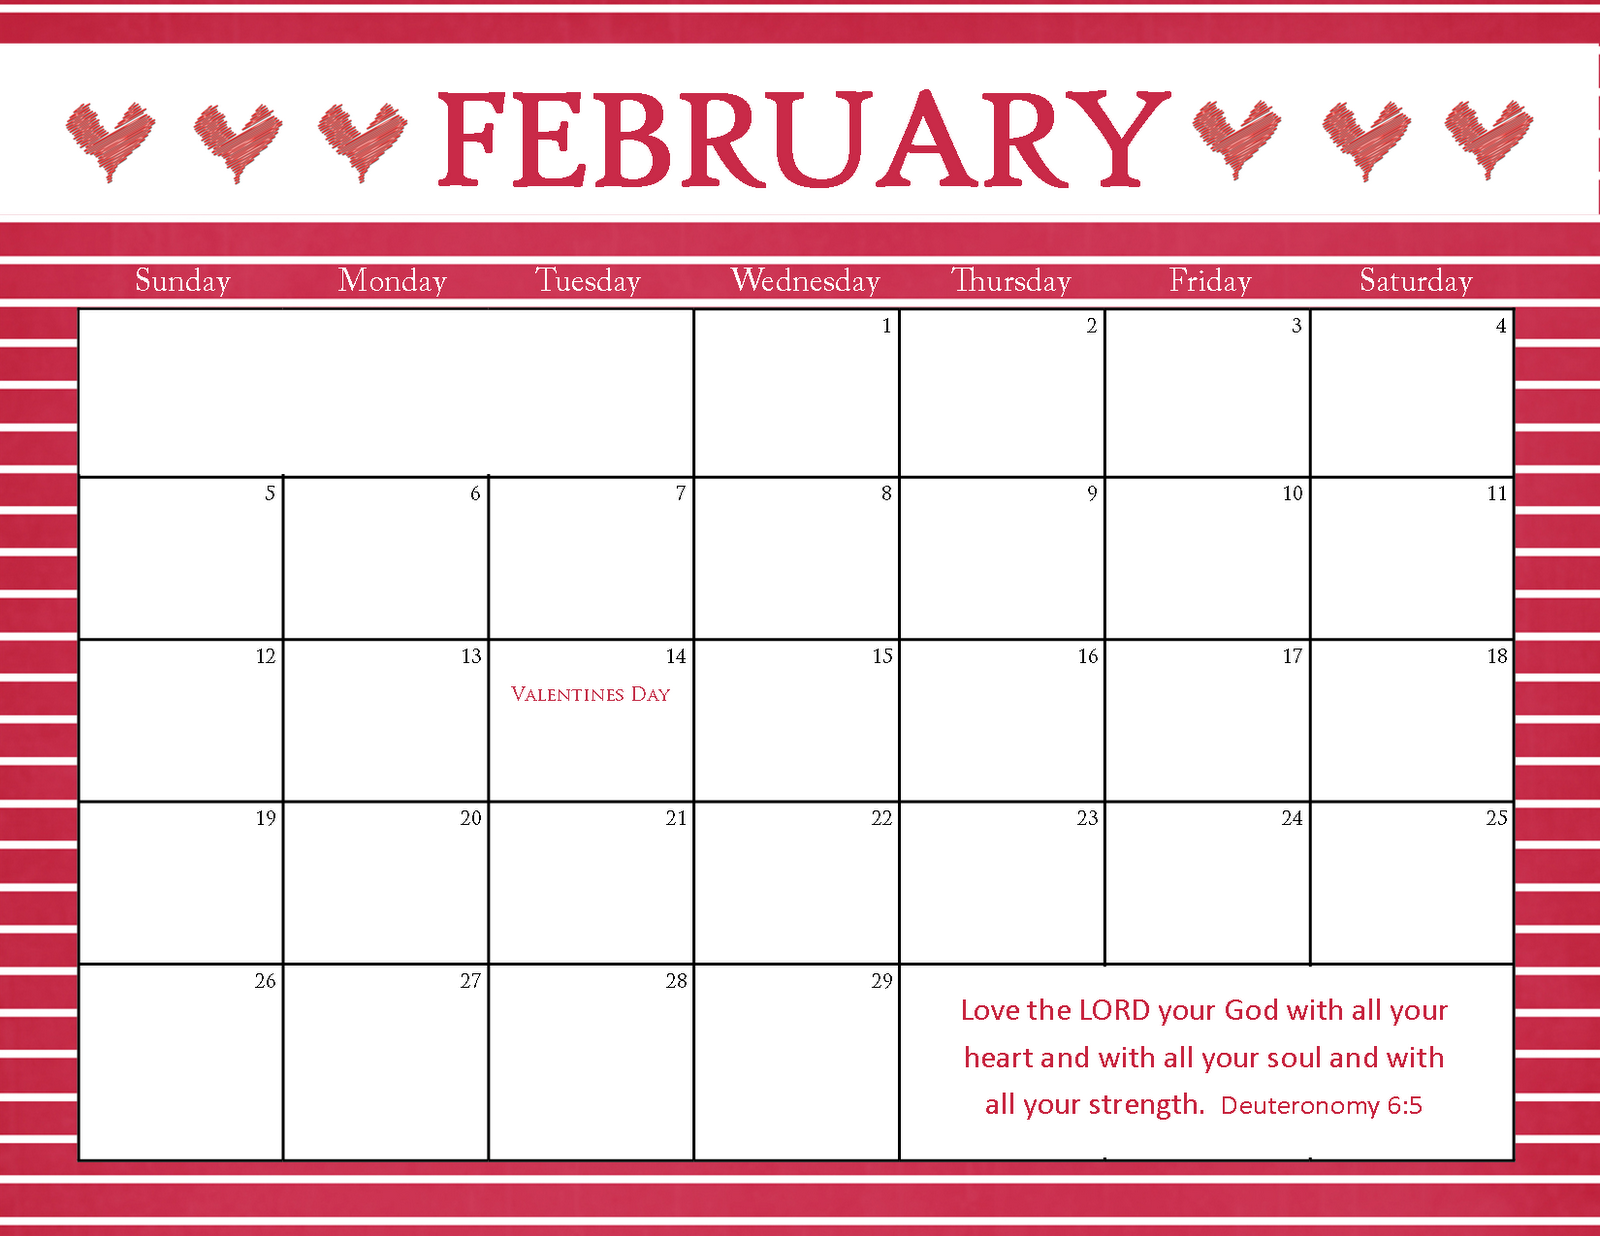 http://2.bp.blogspot.com/-QOlq0MmdVS0/TxjeIS-6rxI/AAAAAAAABS8/j4uSTErxkng/s1600/Calendar+February+2012+red+and+white.png